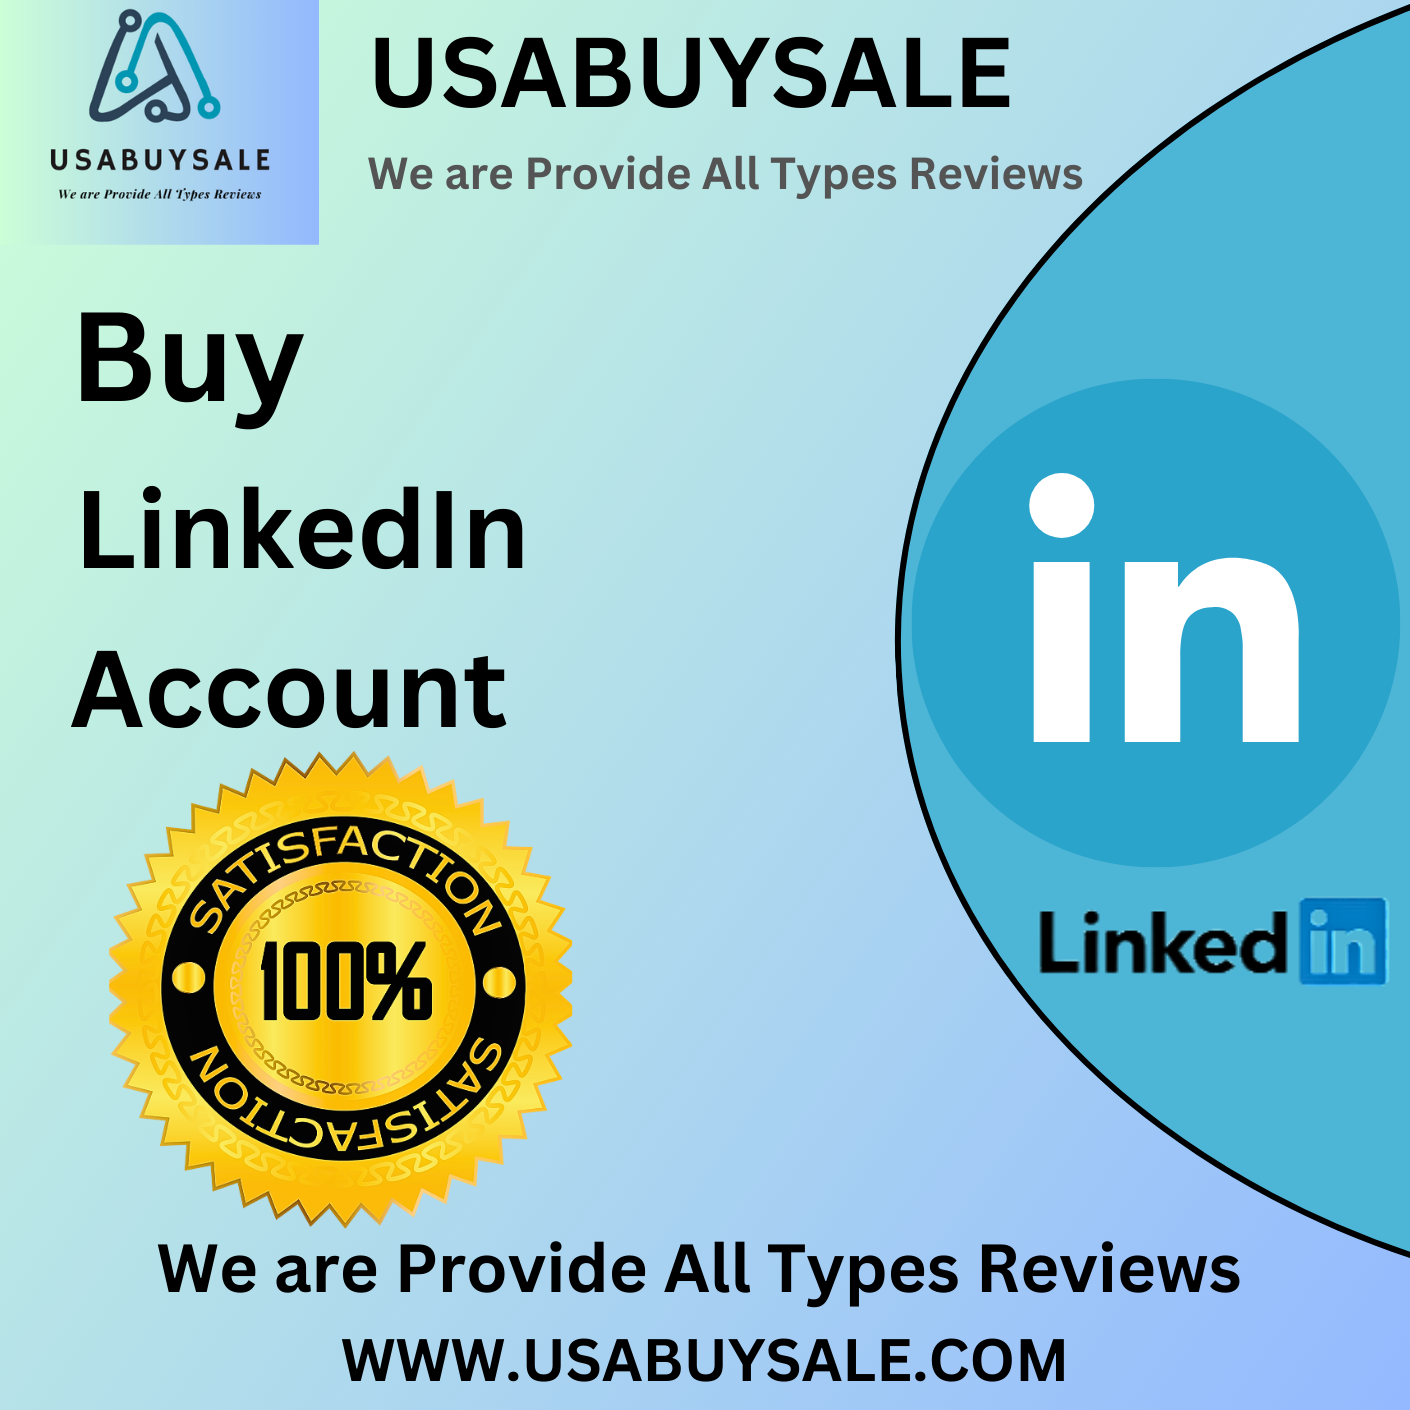 Buy LinkedIn Account - 100% USA Verified Positive